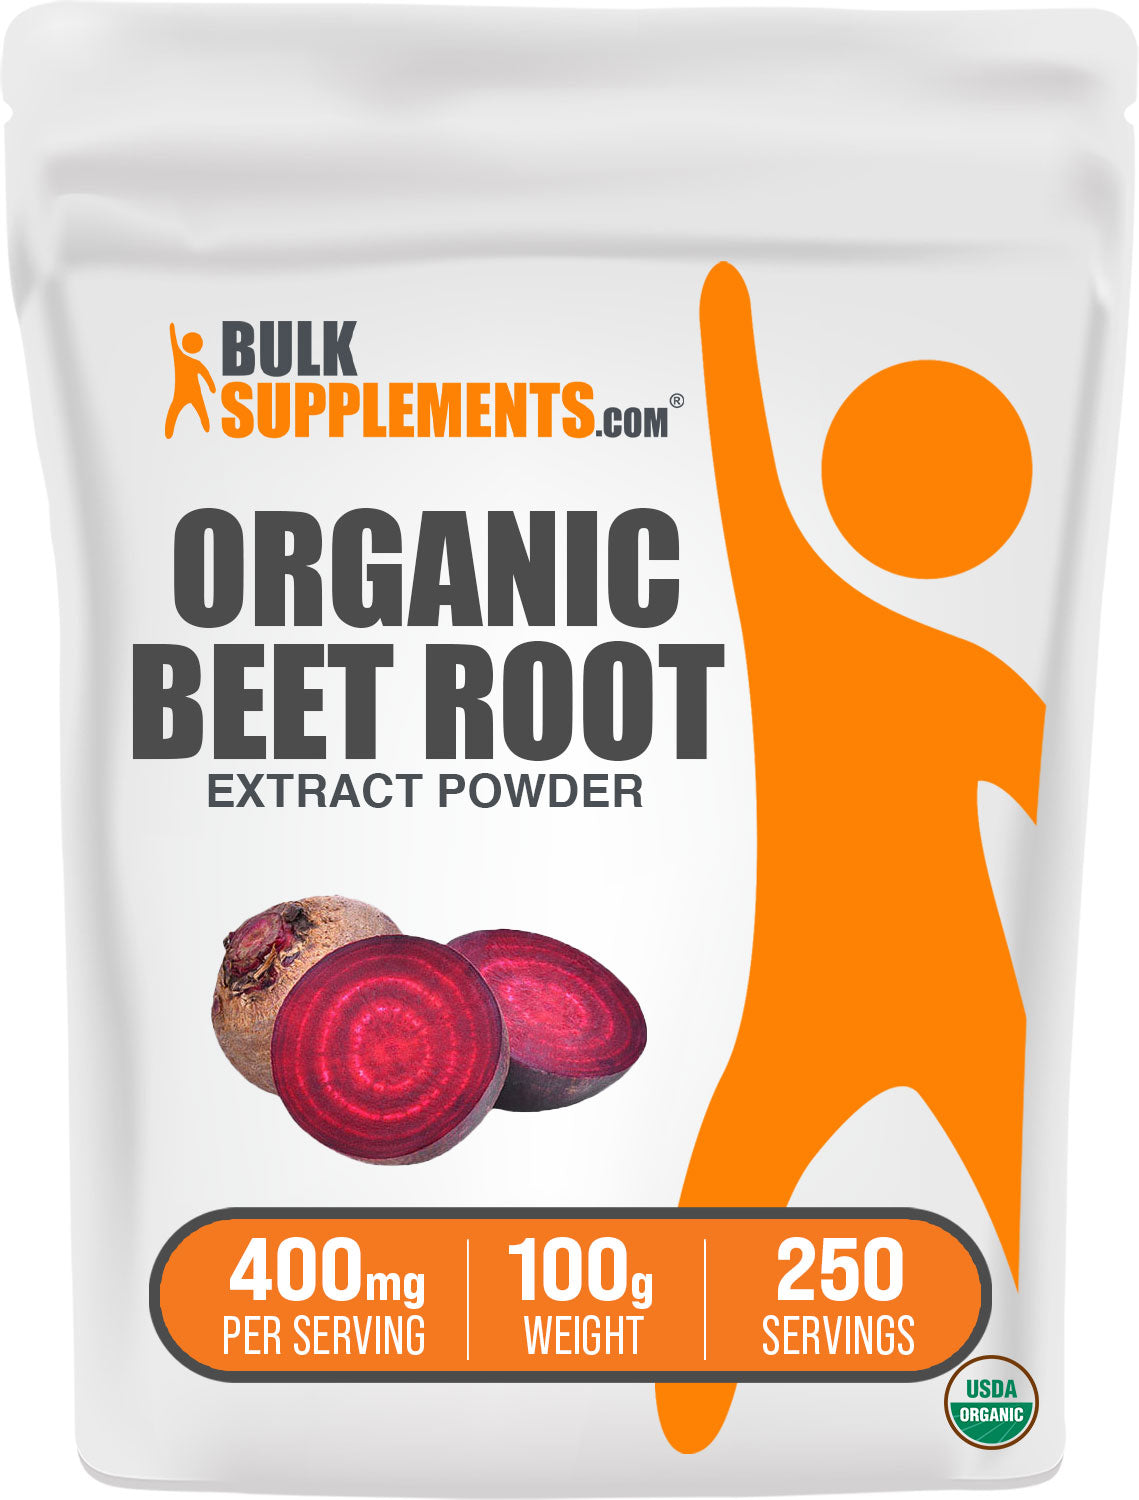 Organic Beet Root Extract Powder 100g Bag